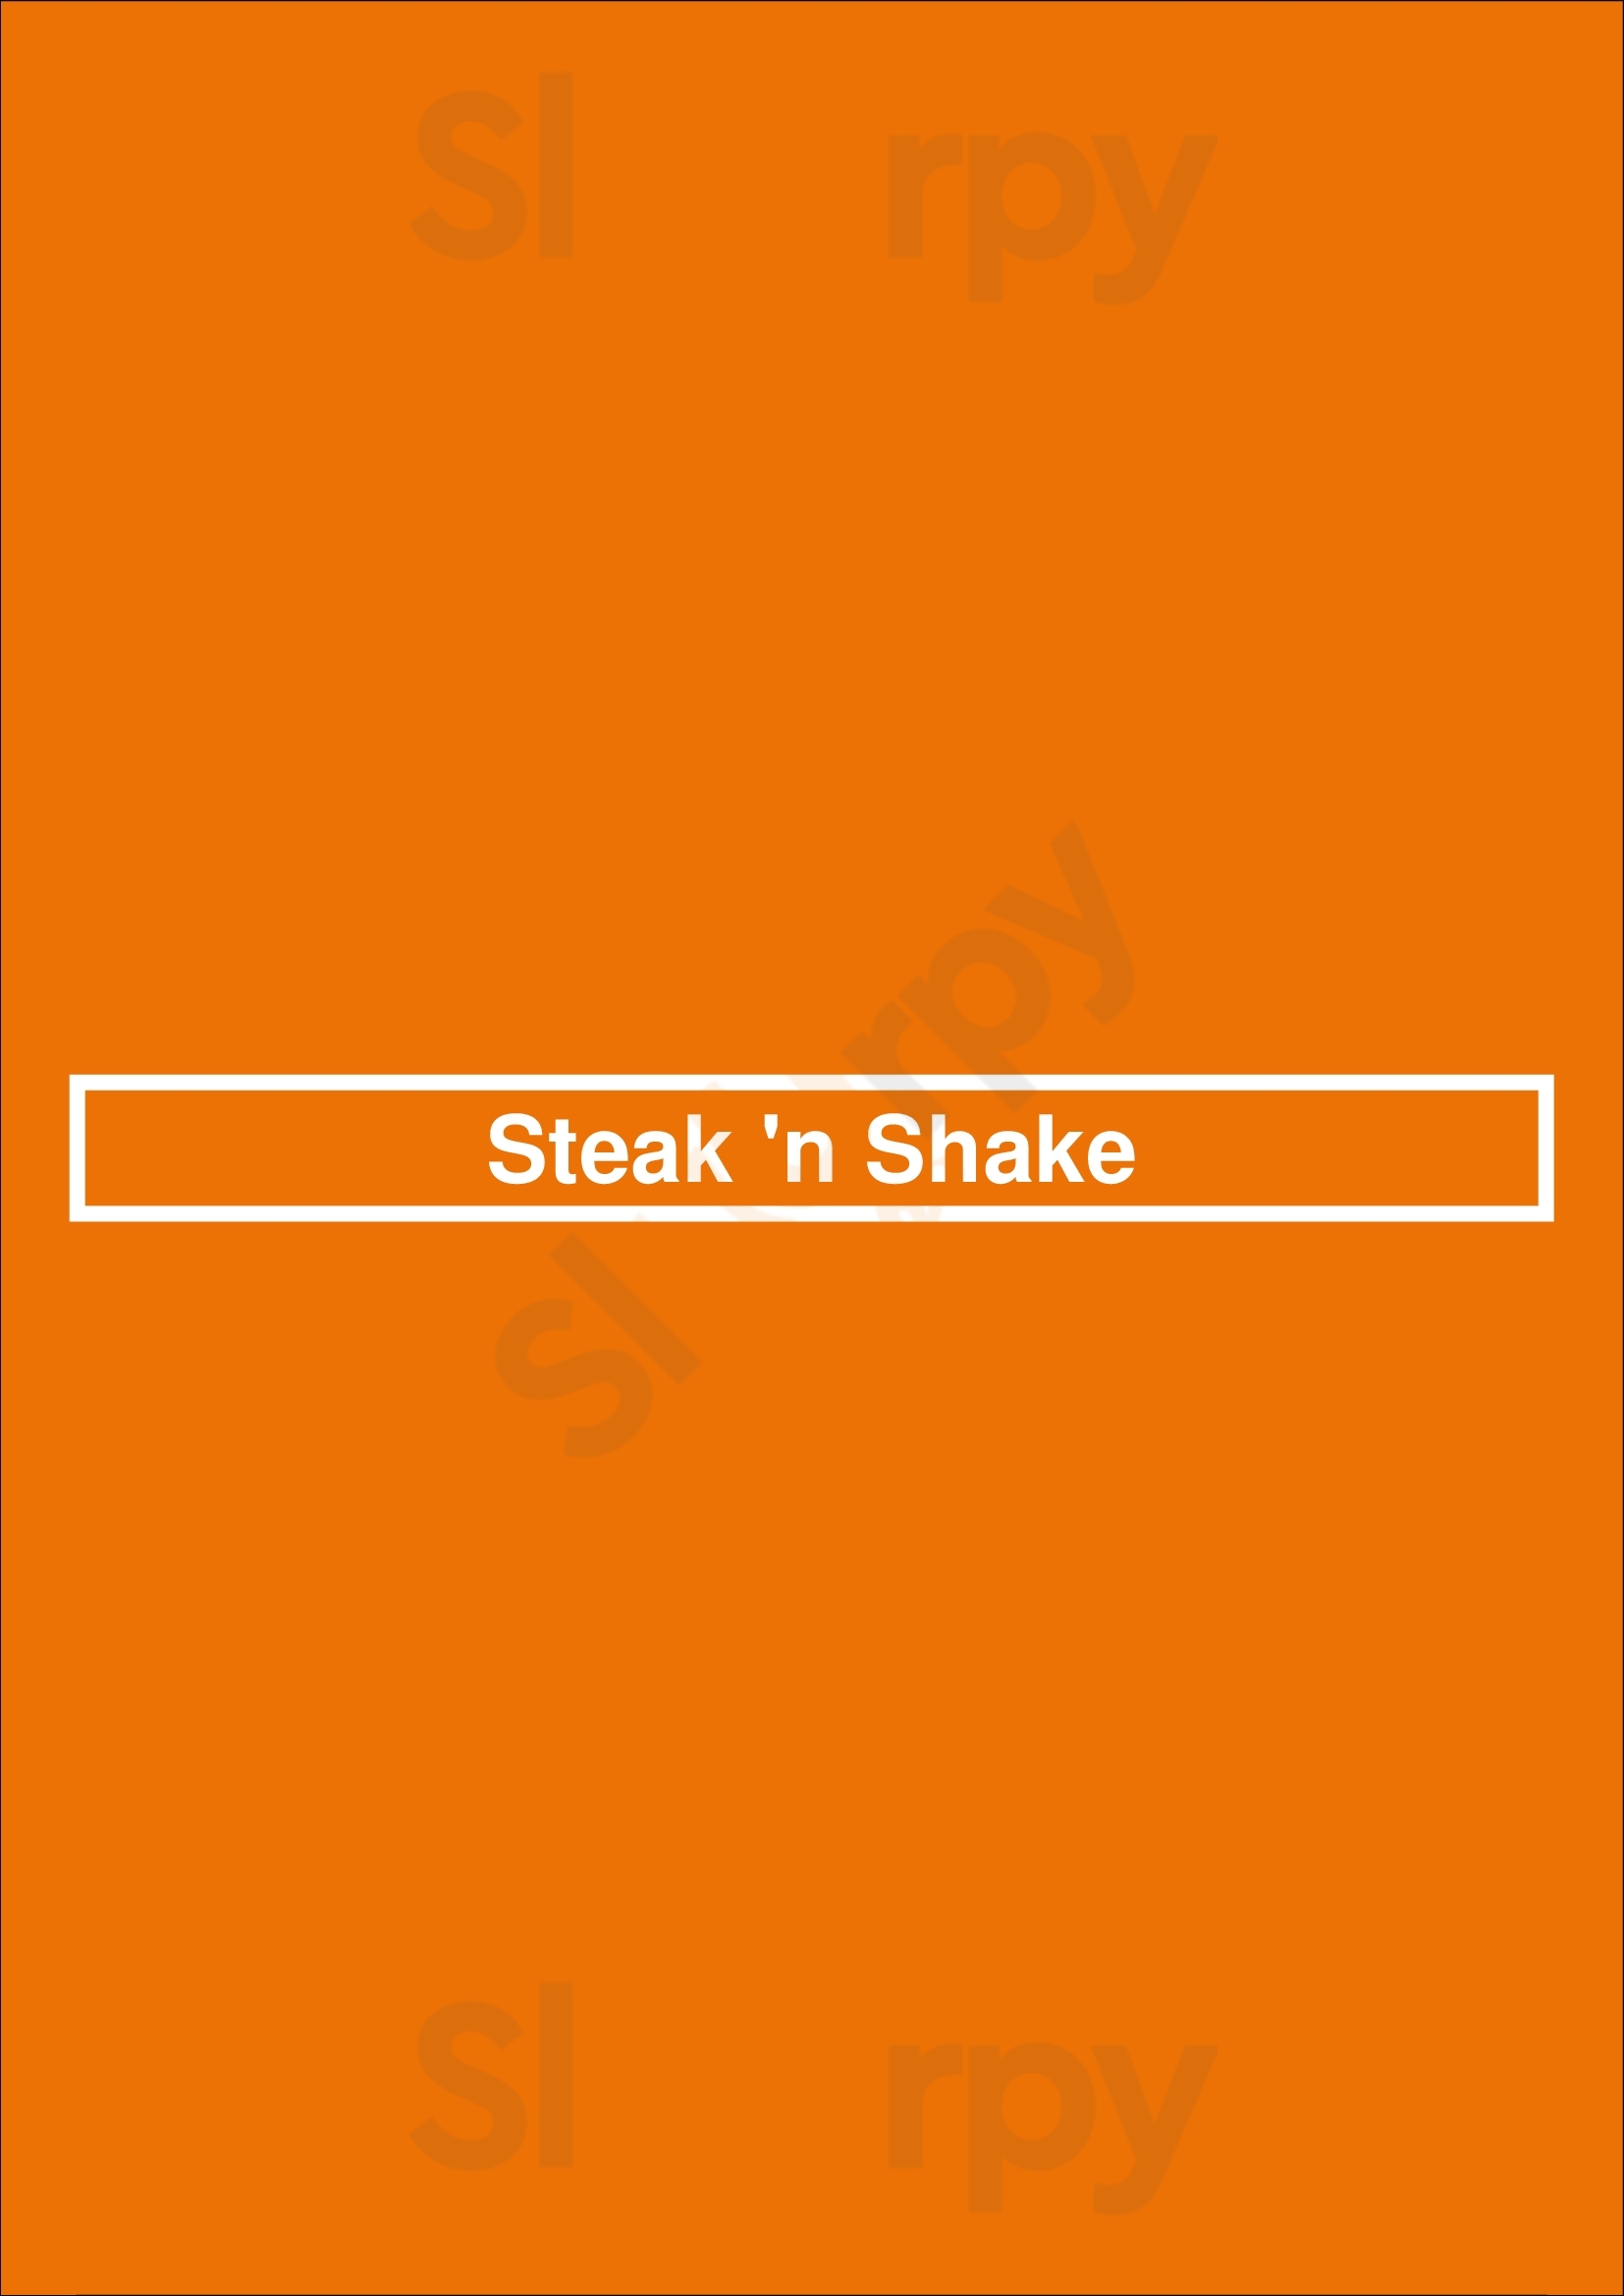 Steak 'n Shake Atlanta Menu - 1